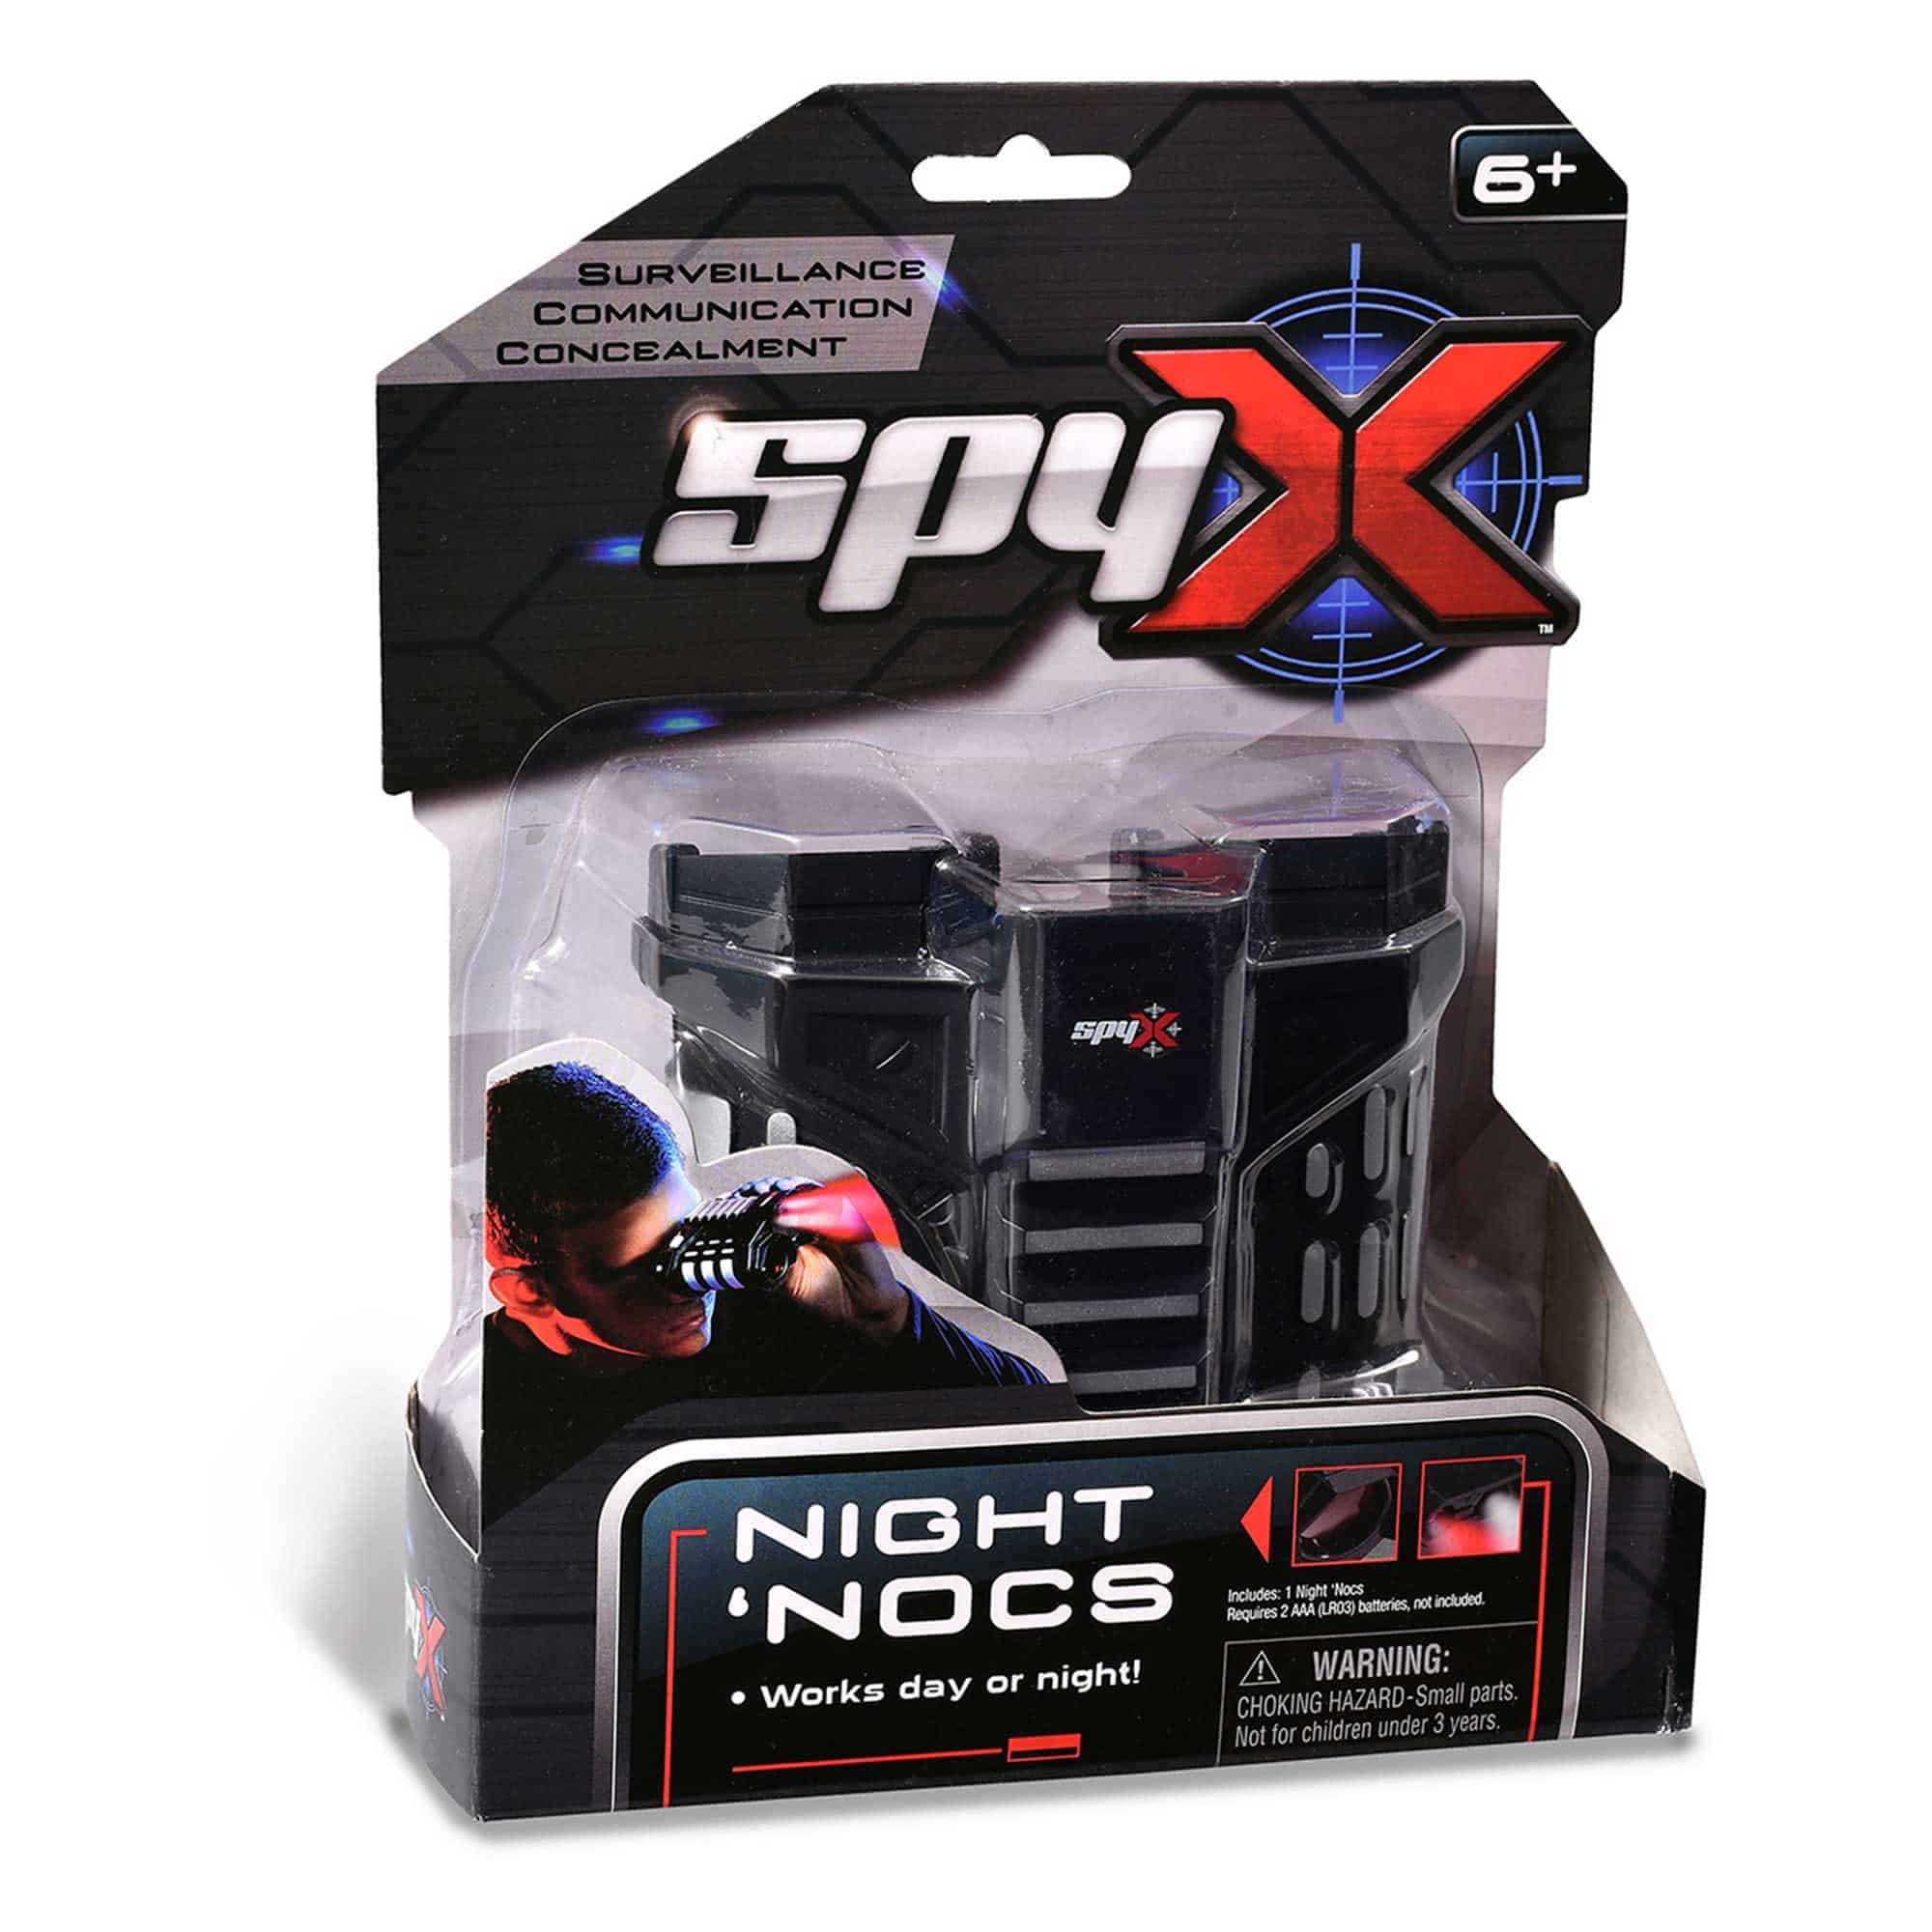 SpyX - Night 'Nocs